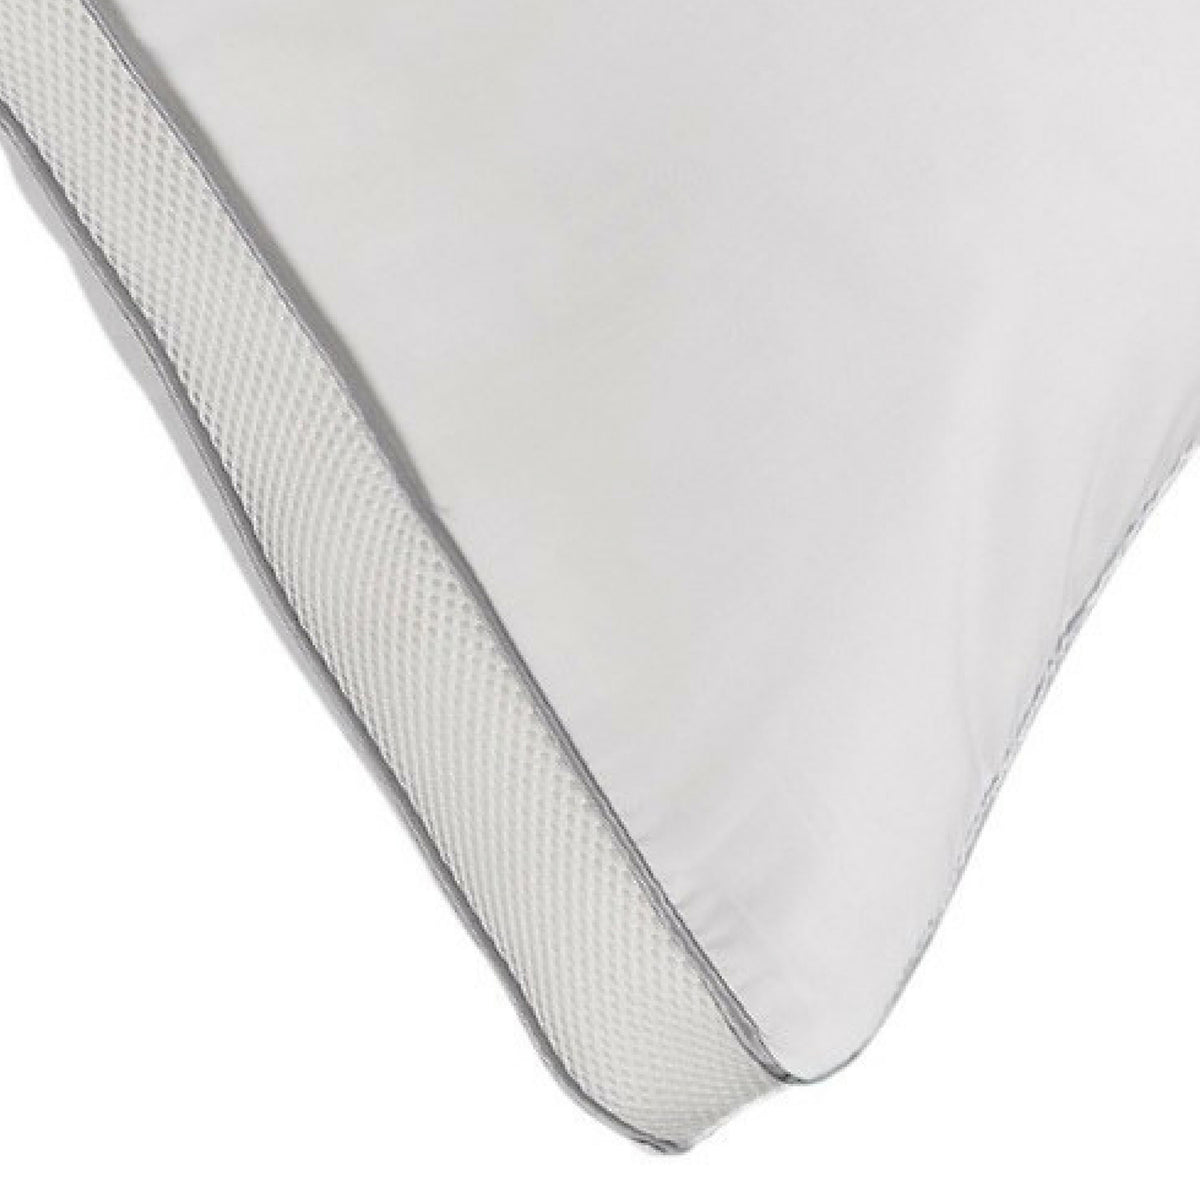 Soft Plush 100% Cotton Mesh Gusseted Down Alternative Stomach Sleeper Pillow